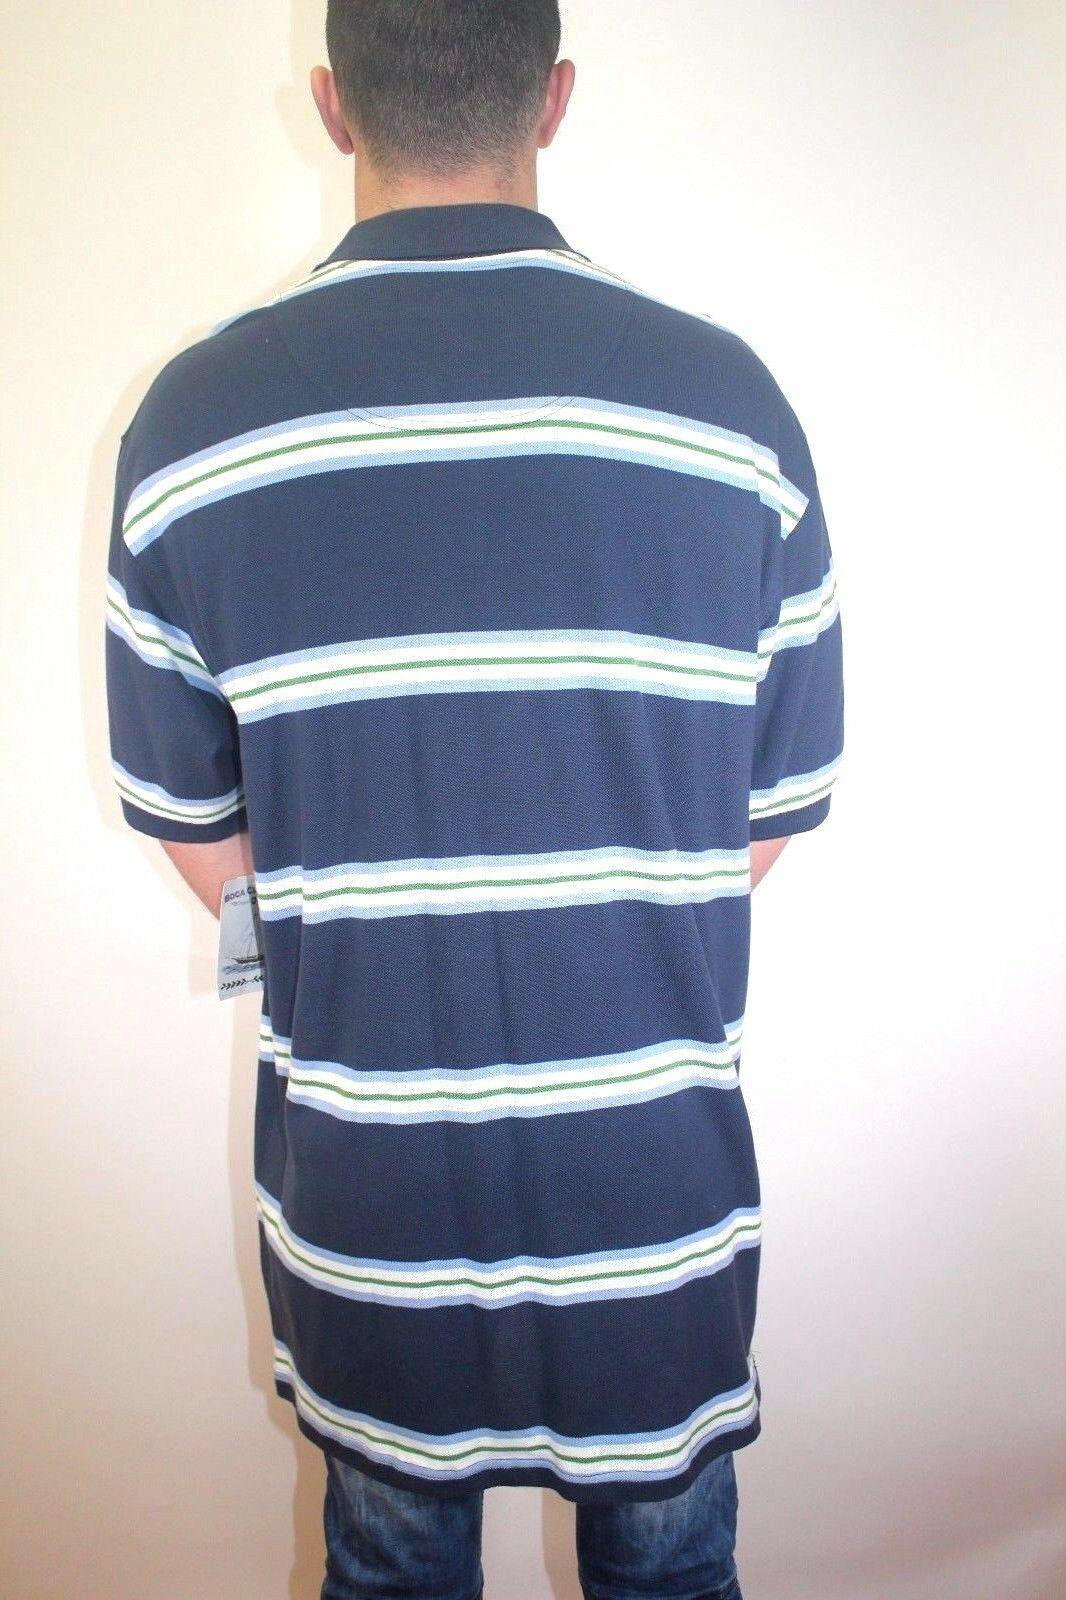 Boca Classics Polo Shirt Navy White Green Stripe Cotton Mens Size XL - SVNYFancy